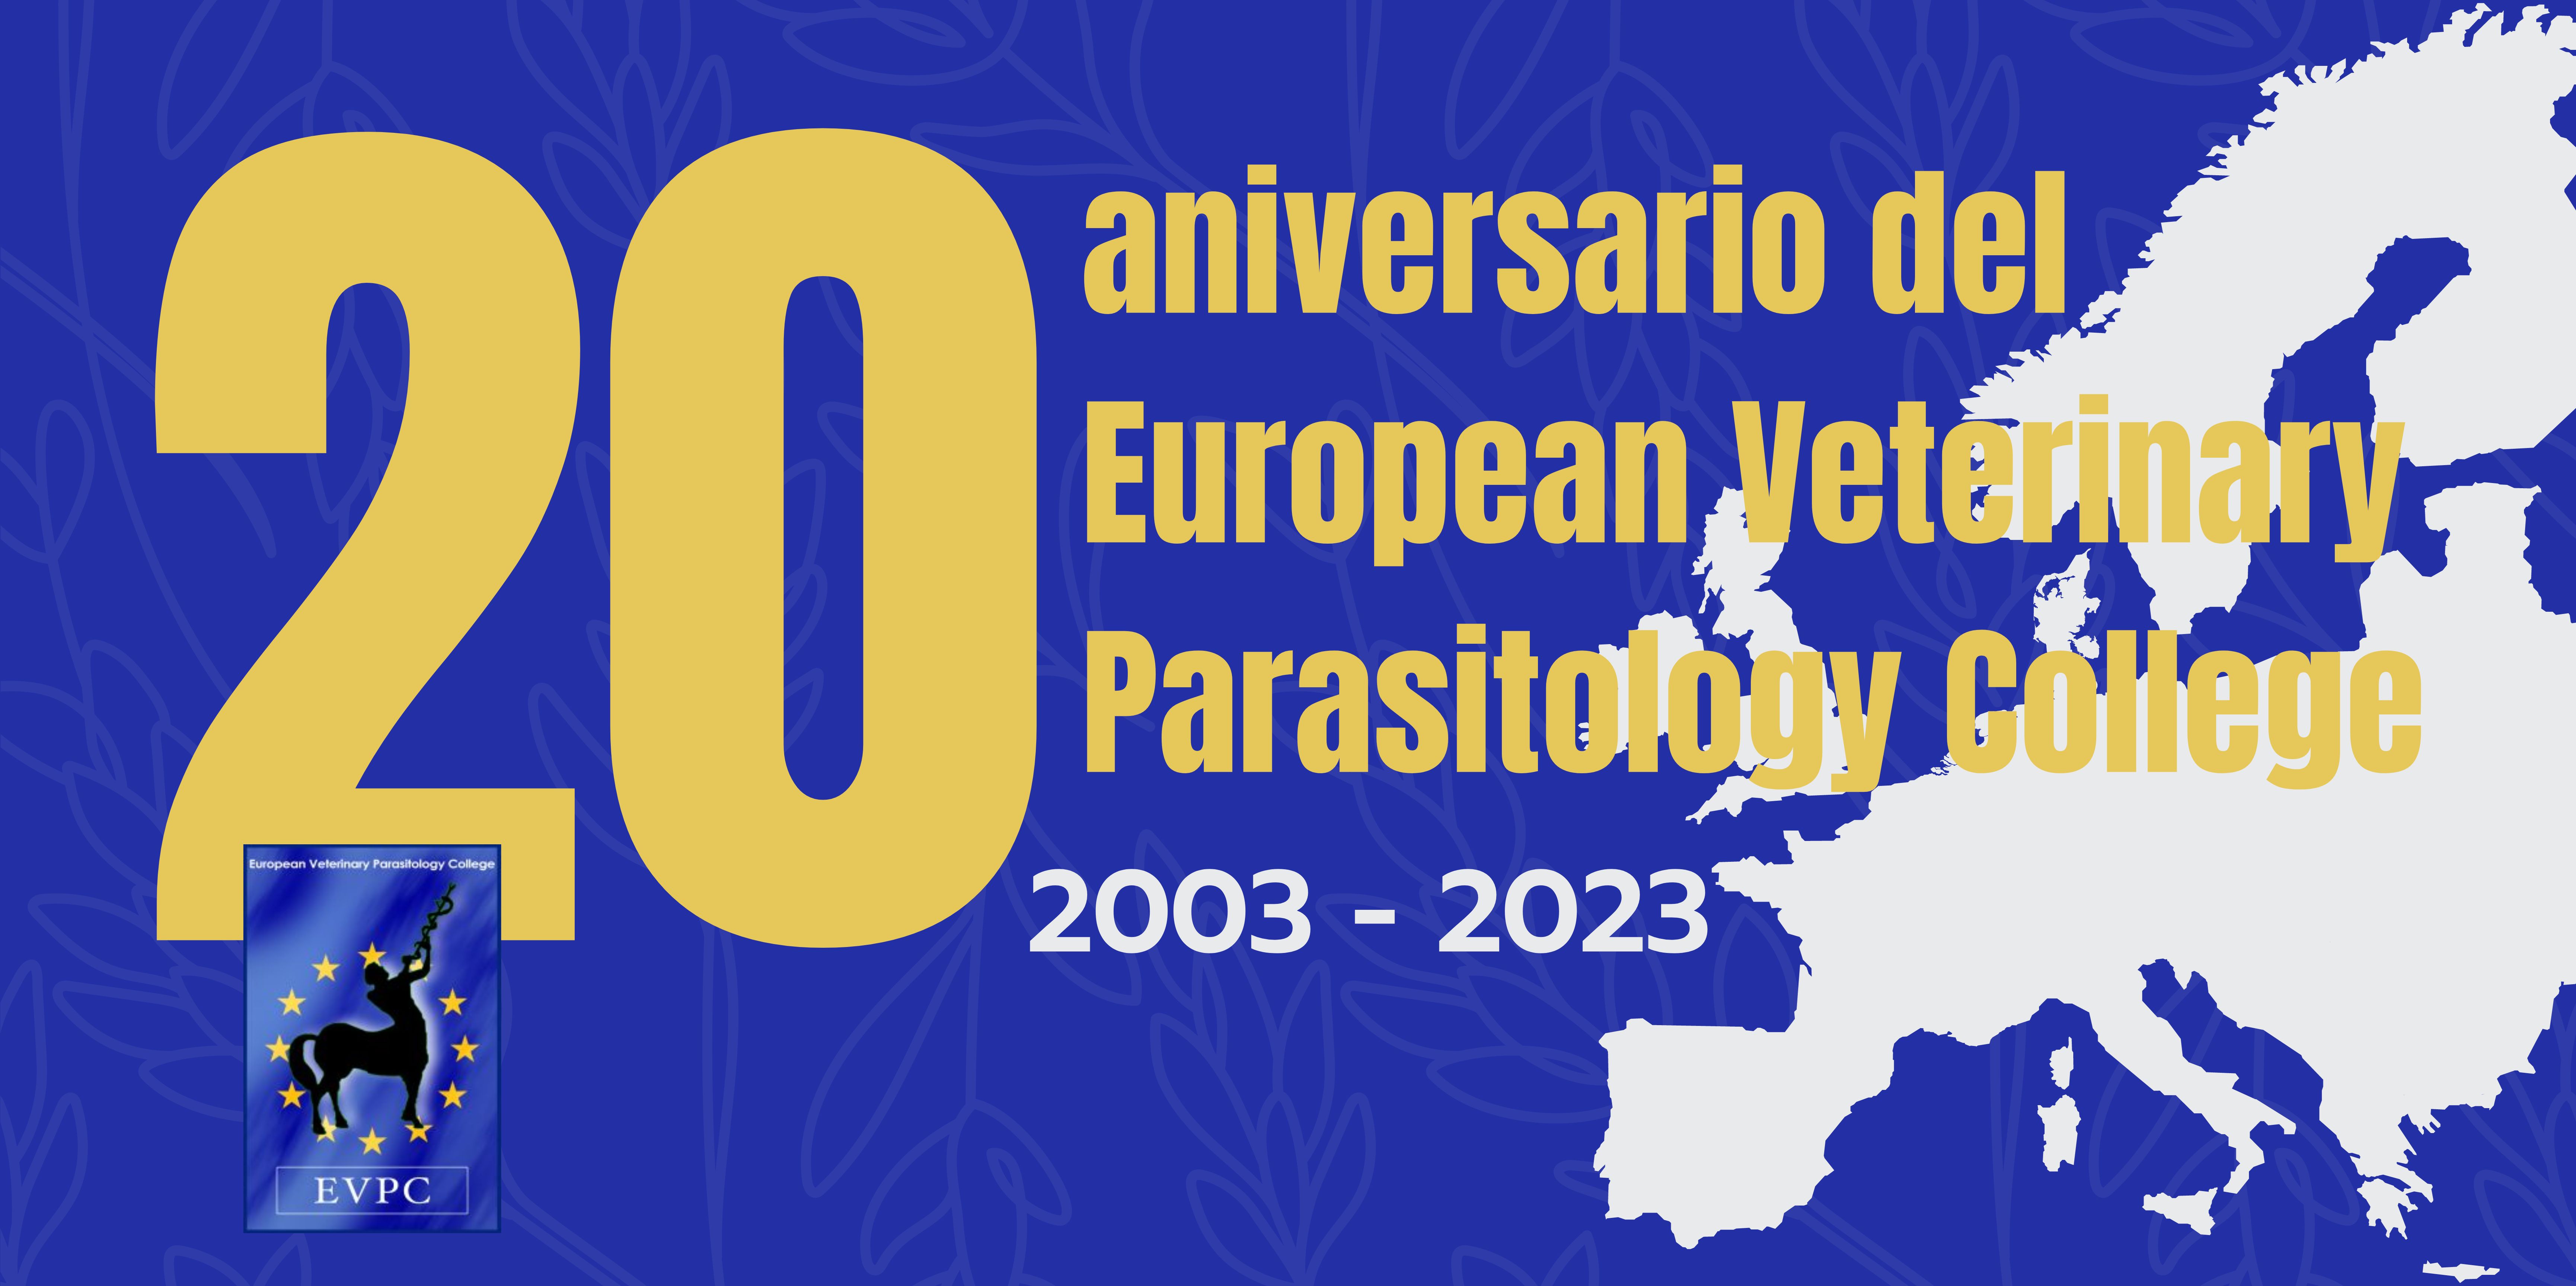 Celebramos el 20 Aniversario del European Veterinary Parasitology College - EVPC